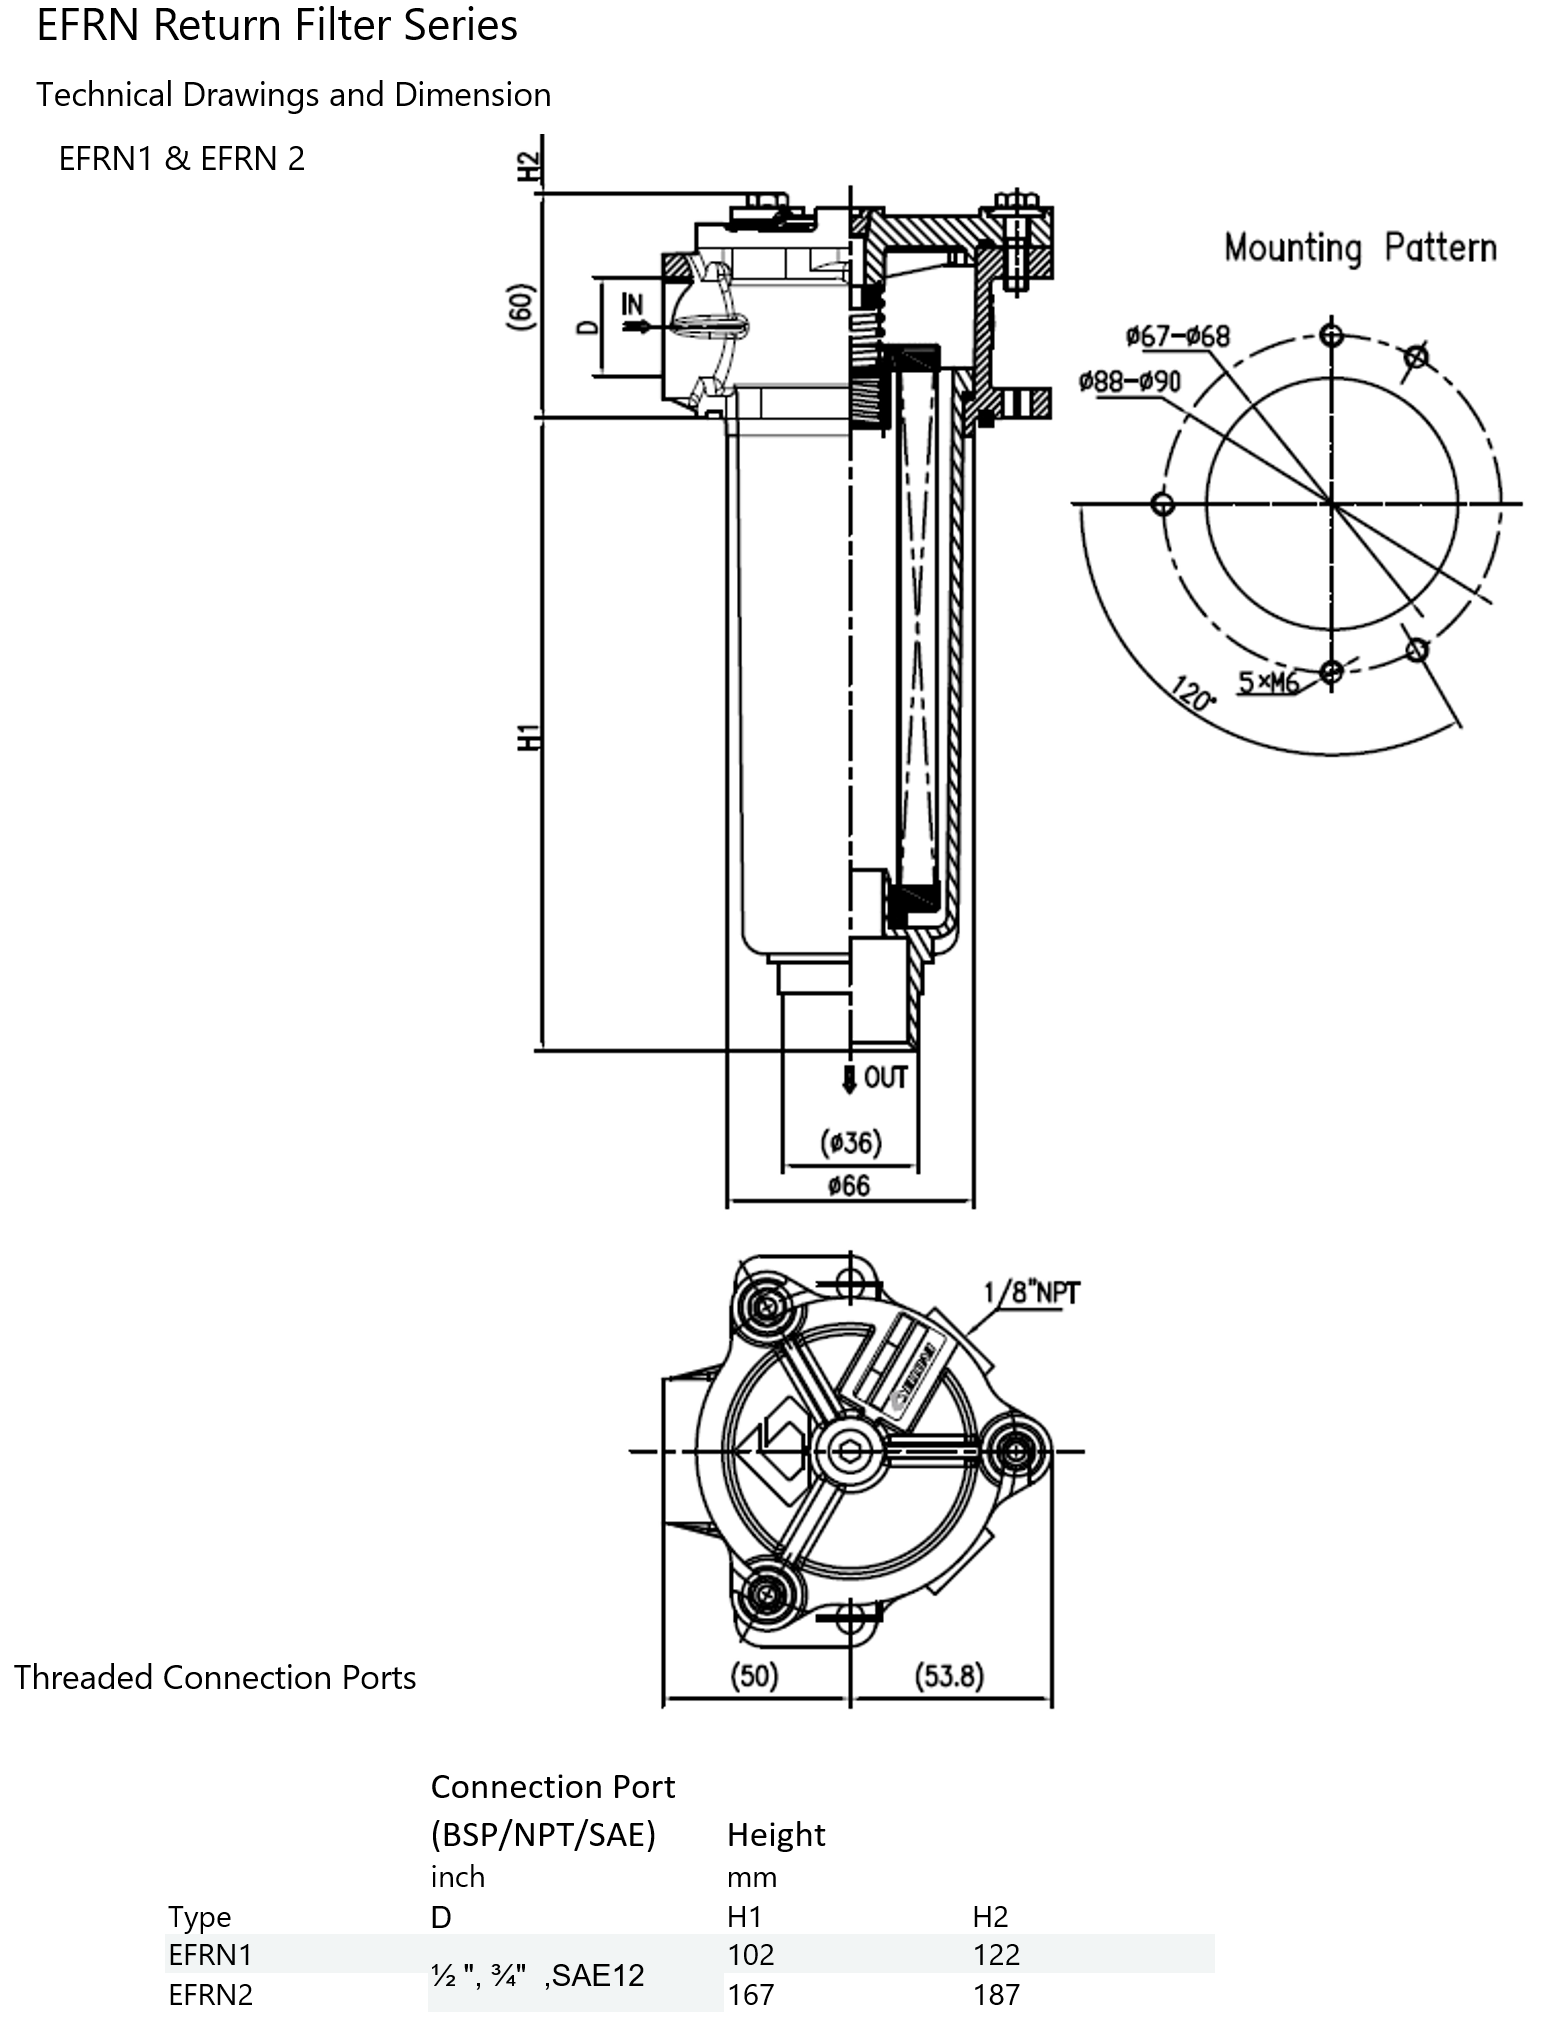 EVOTEK suction filter drawings